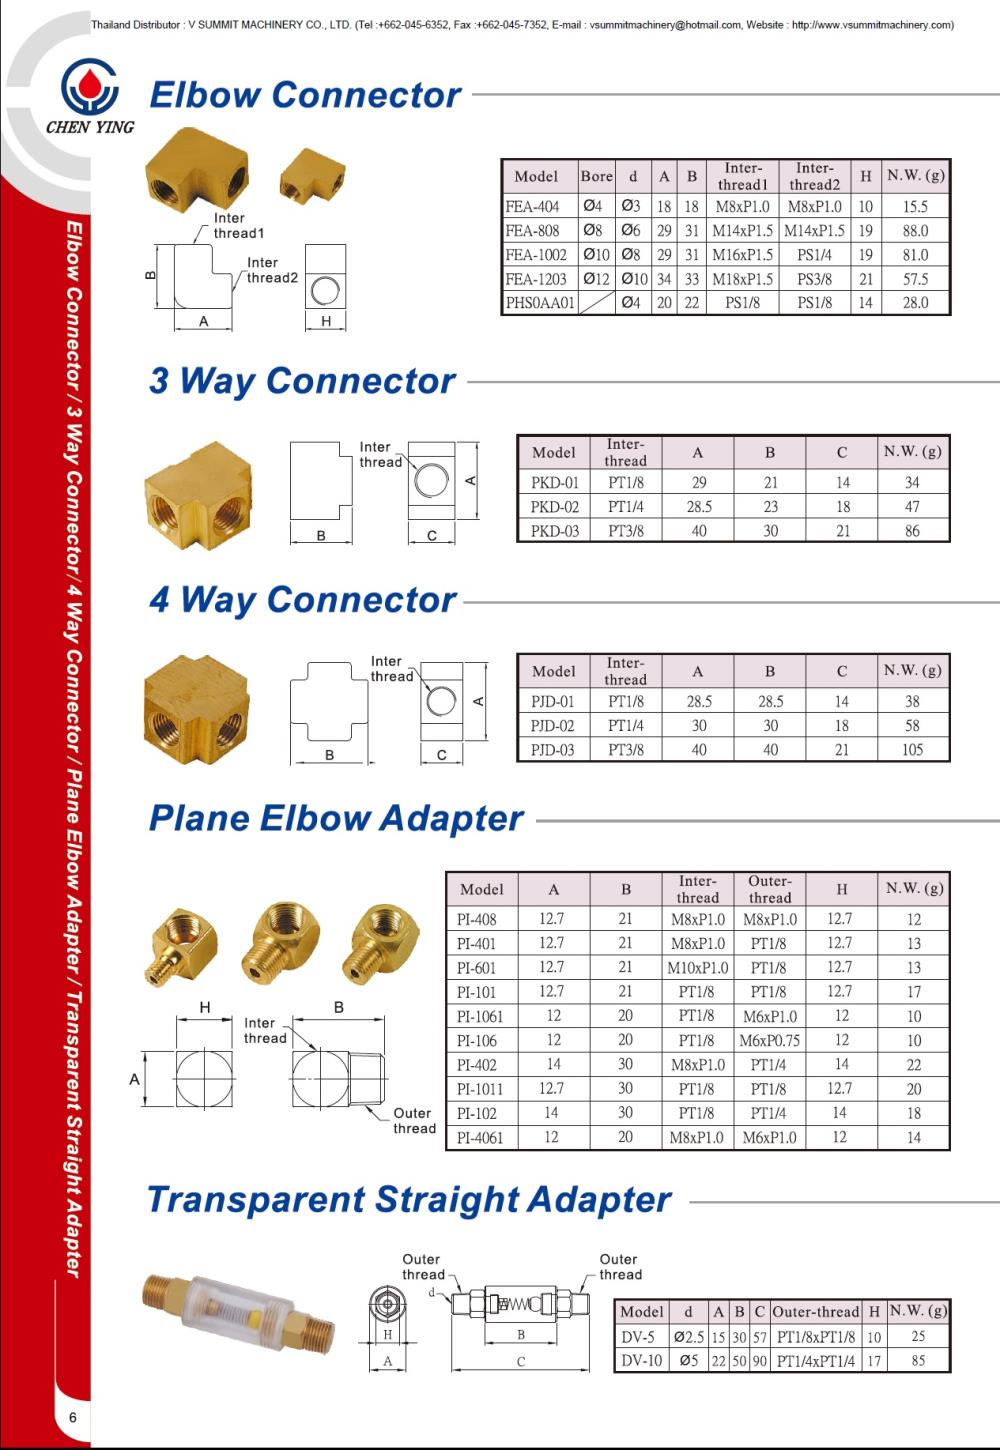 Transparent Straight Adapter, ข้อต่อ, ข้อต่อทองเหลือง, เช็ควาล์วใส, check valve, ข้อต่อเช็ควาล์ว, เช็ควาล์ว